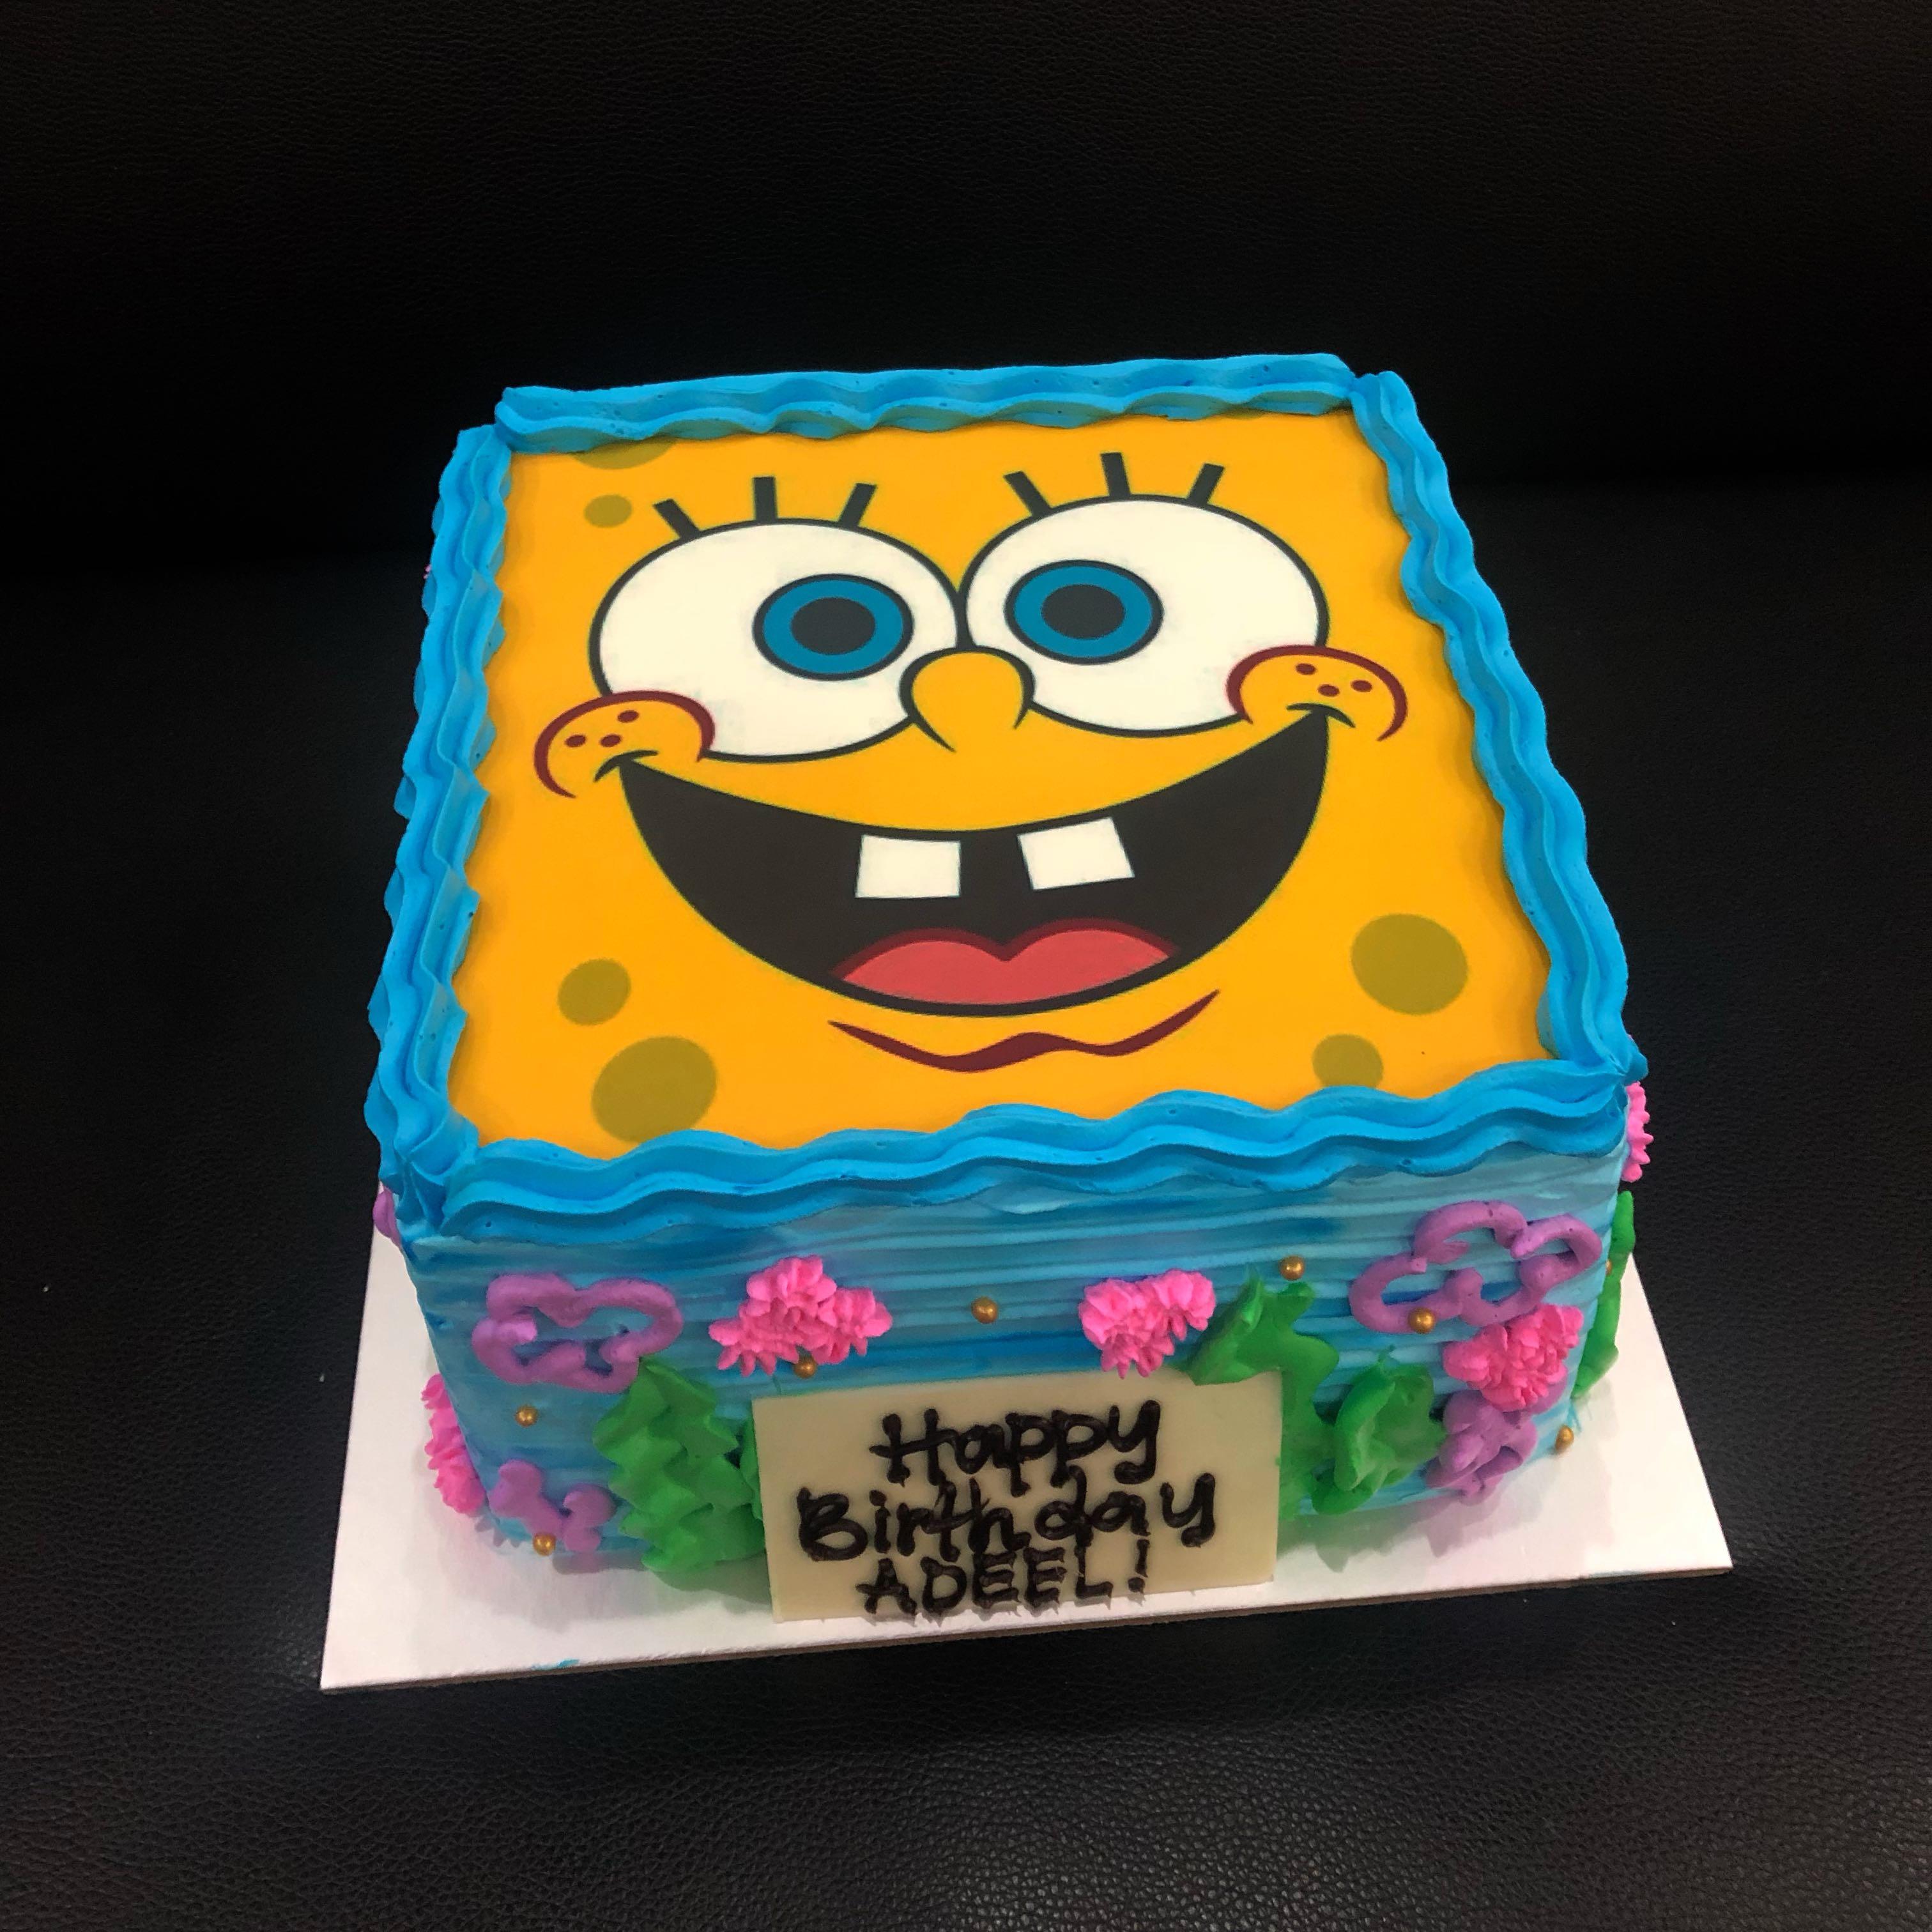 Spongebob Cake – Circo's Pastry Shop